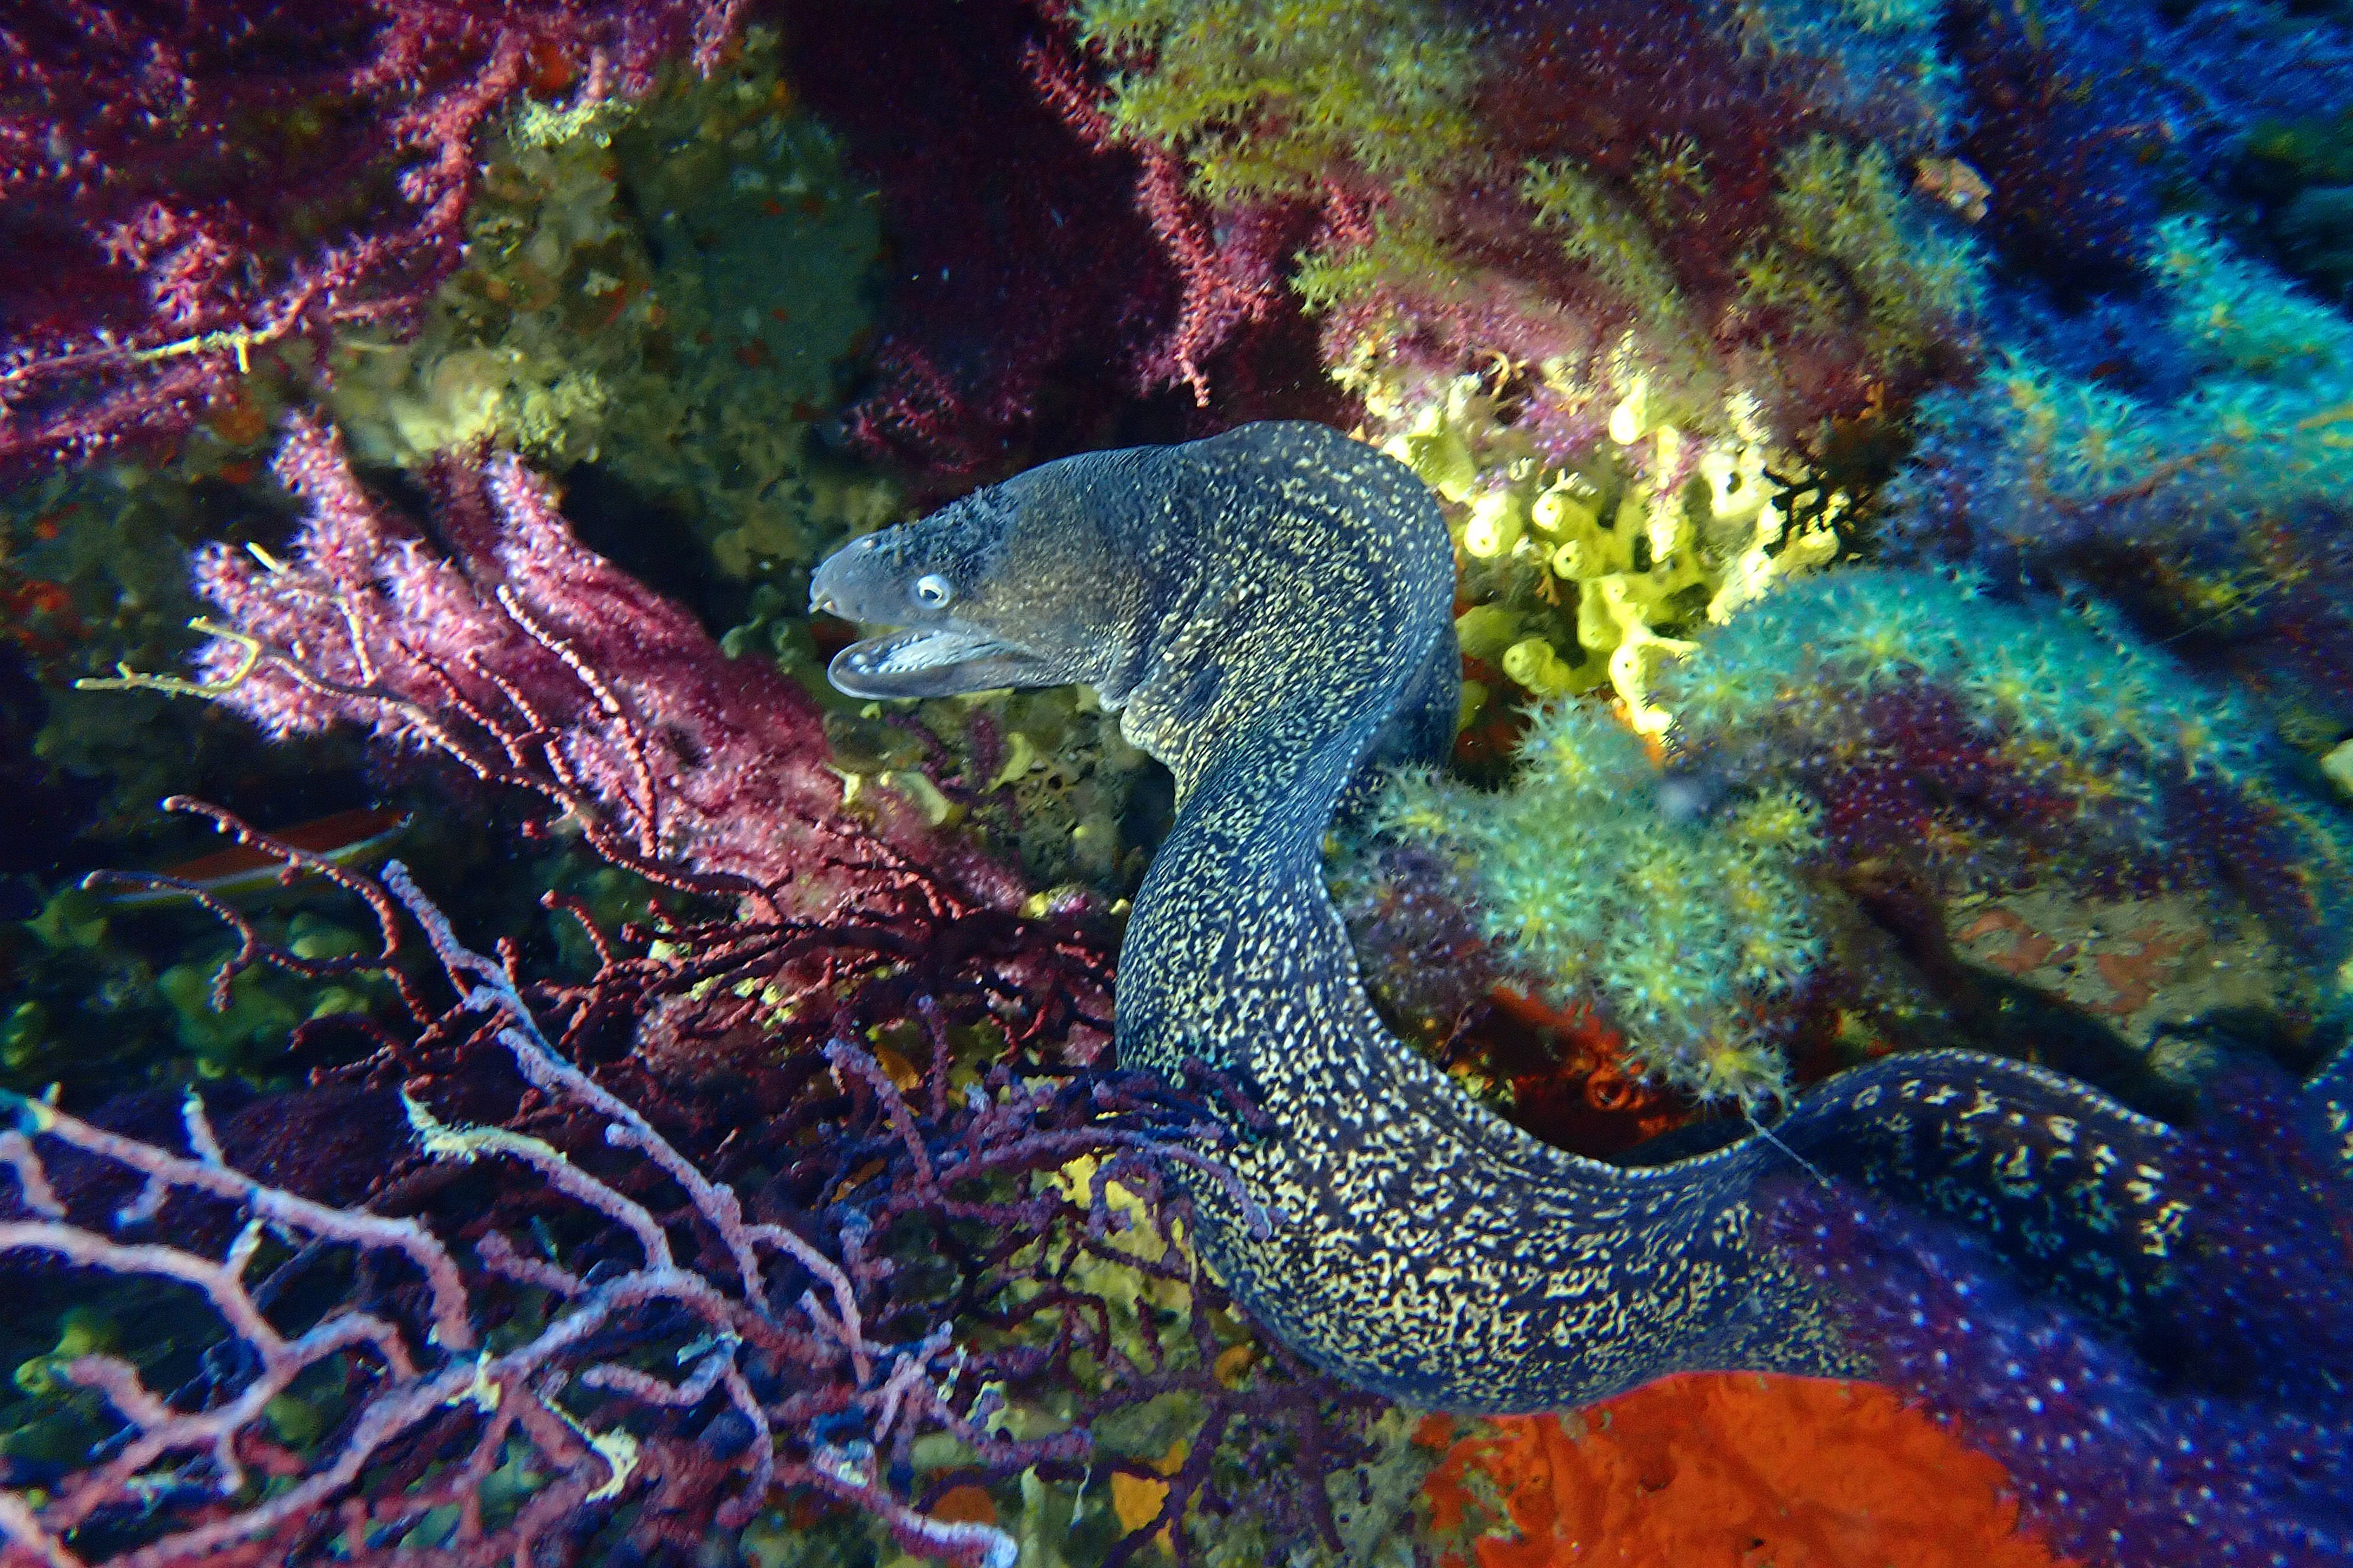 Moray eel on the Gorgons